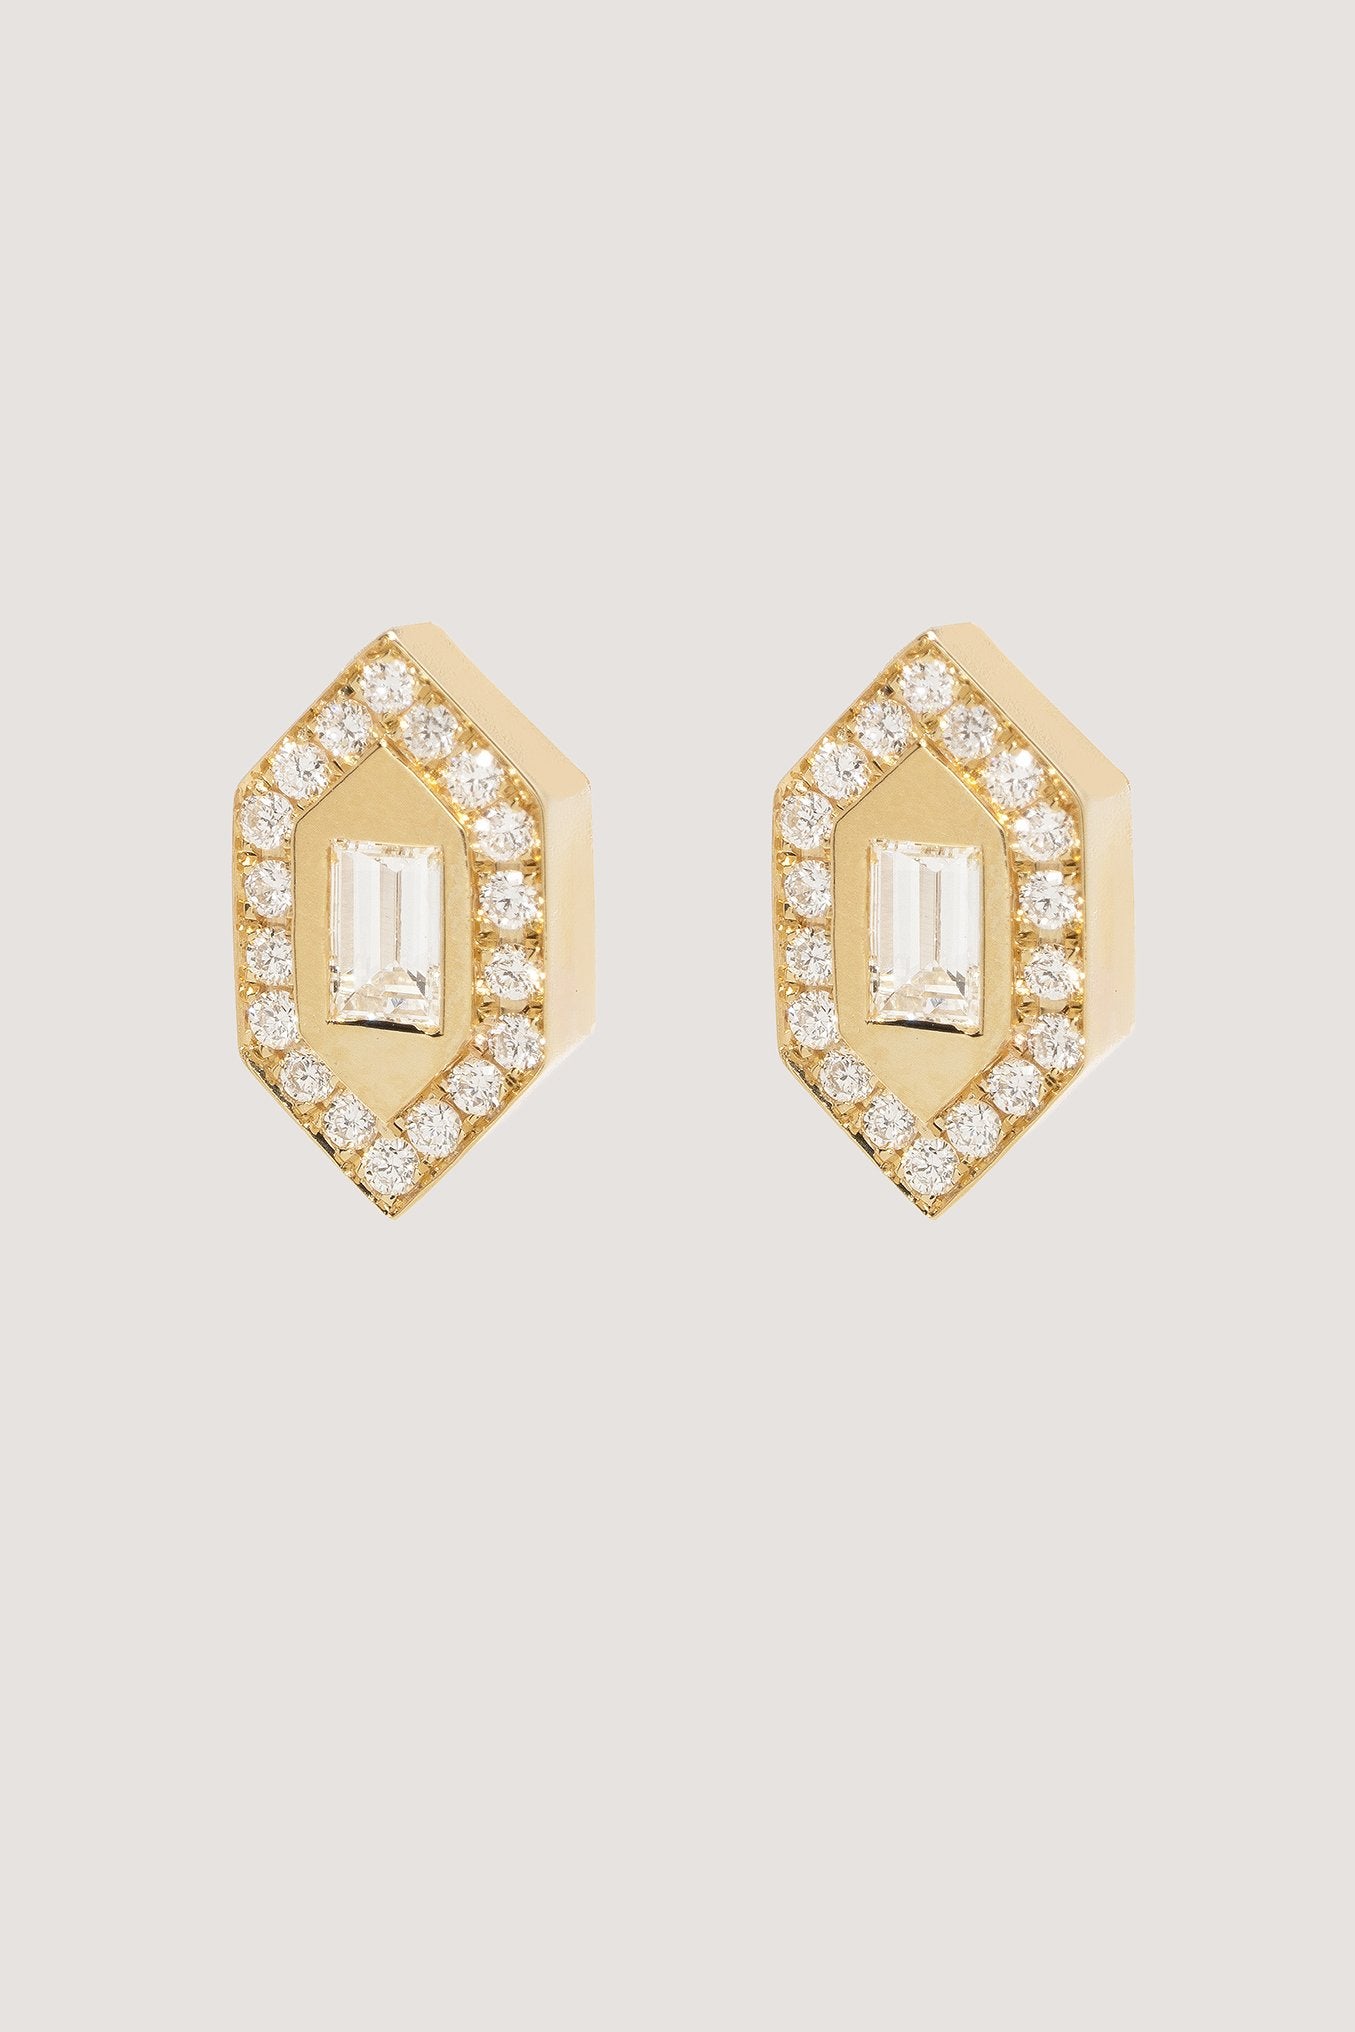 Azlee - N/S Diamond Stud Earrings, Gold